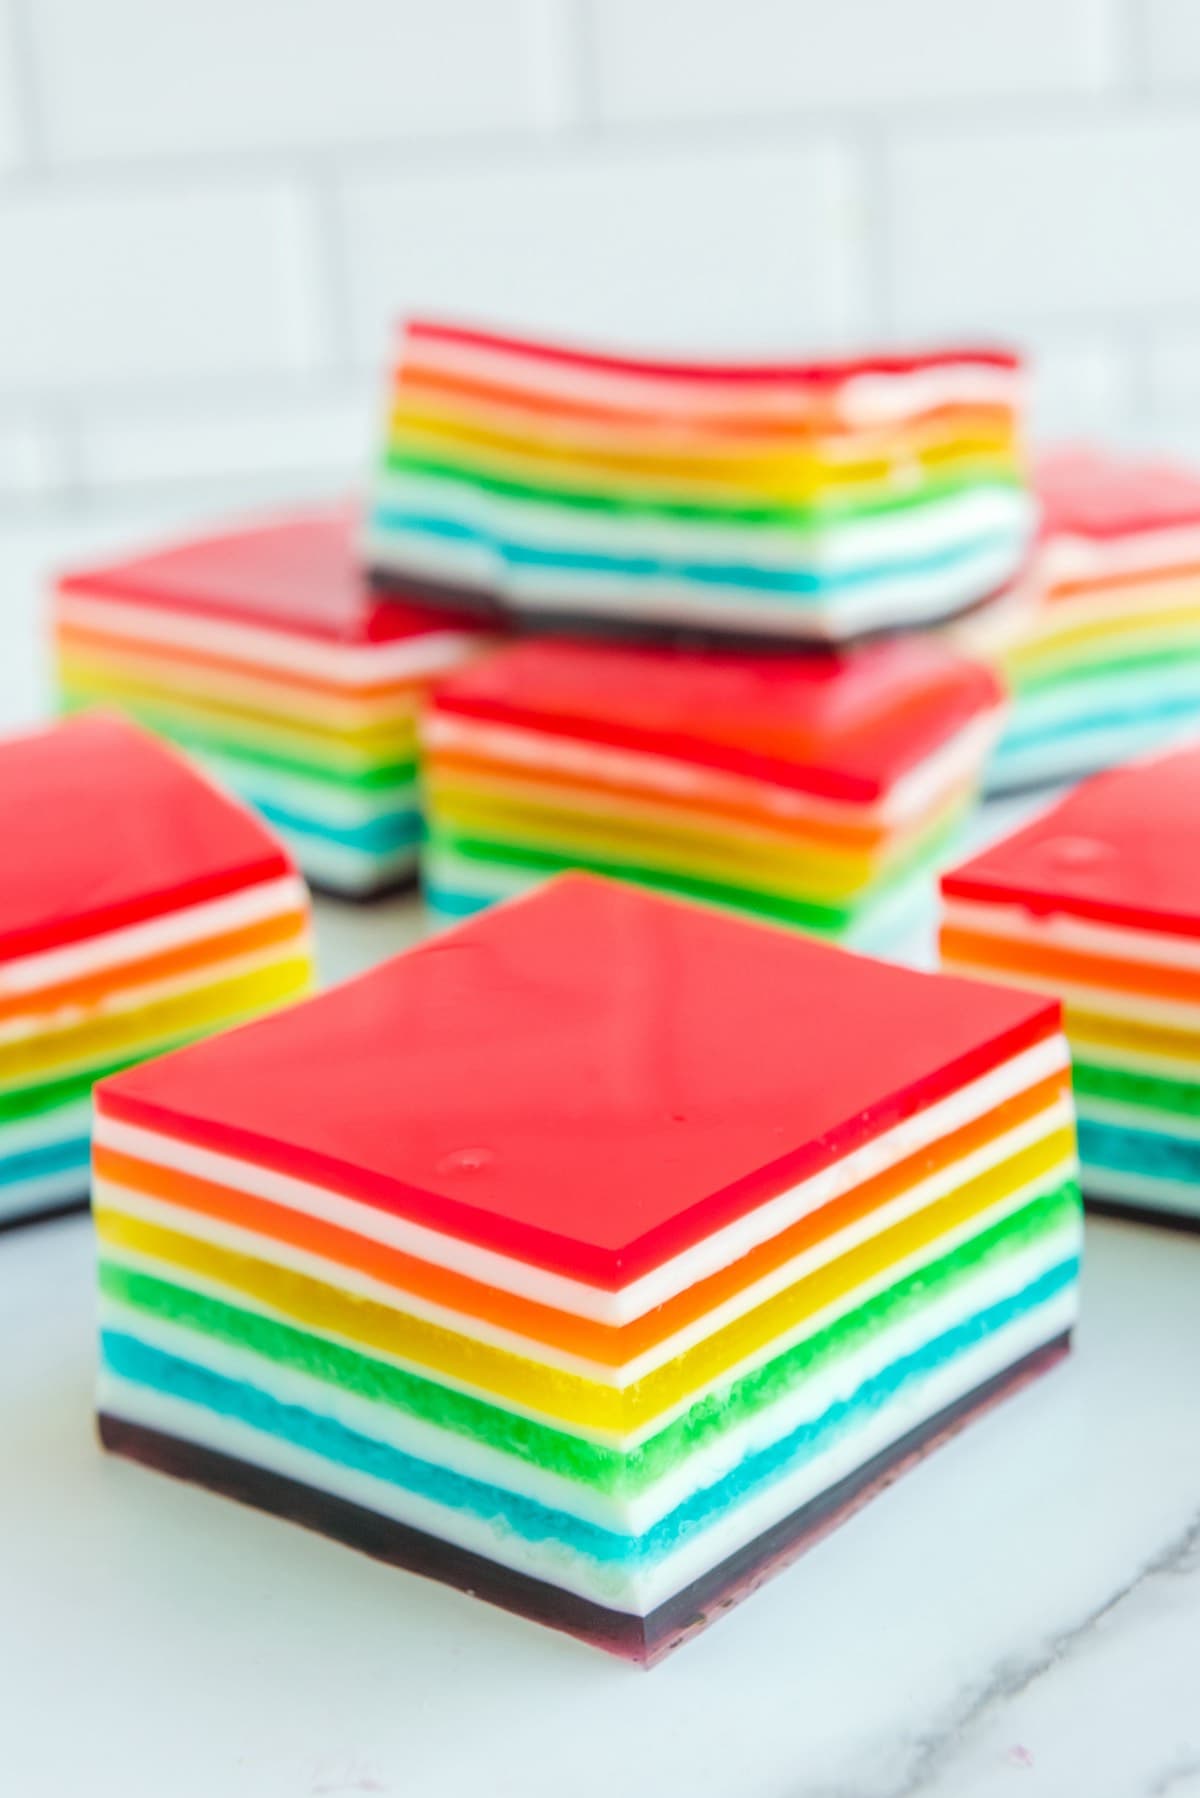 Rainbow Jello cut into squares